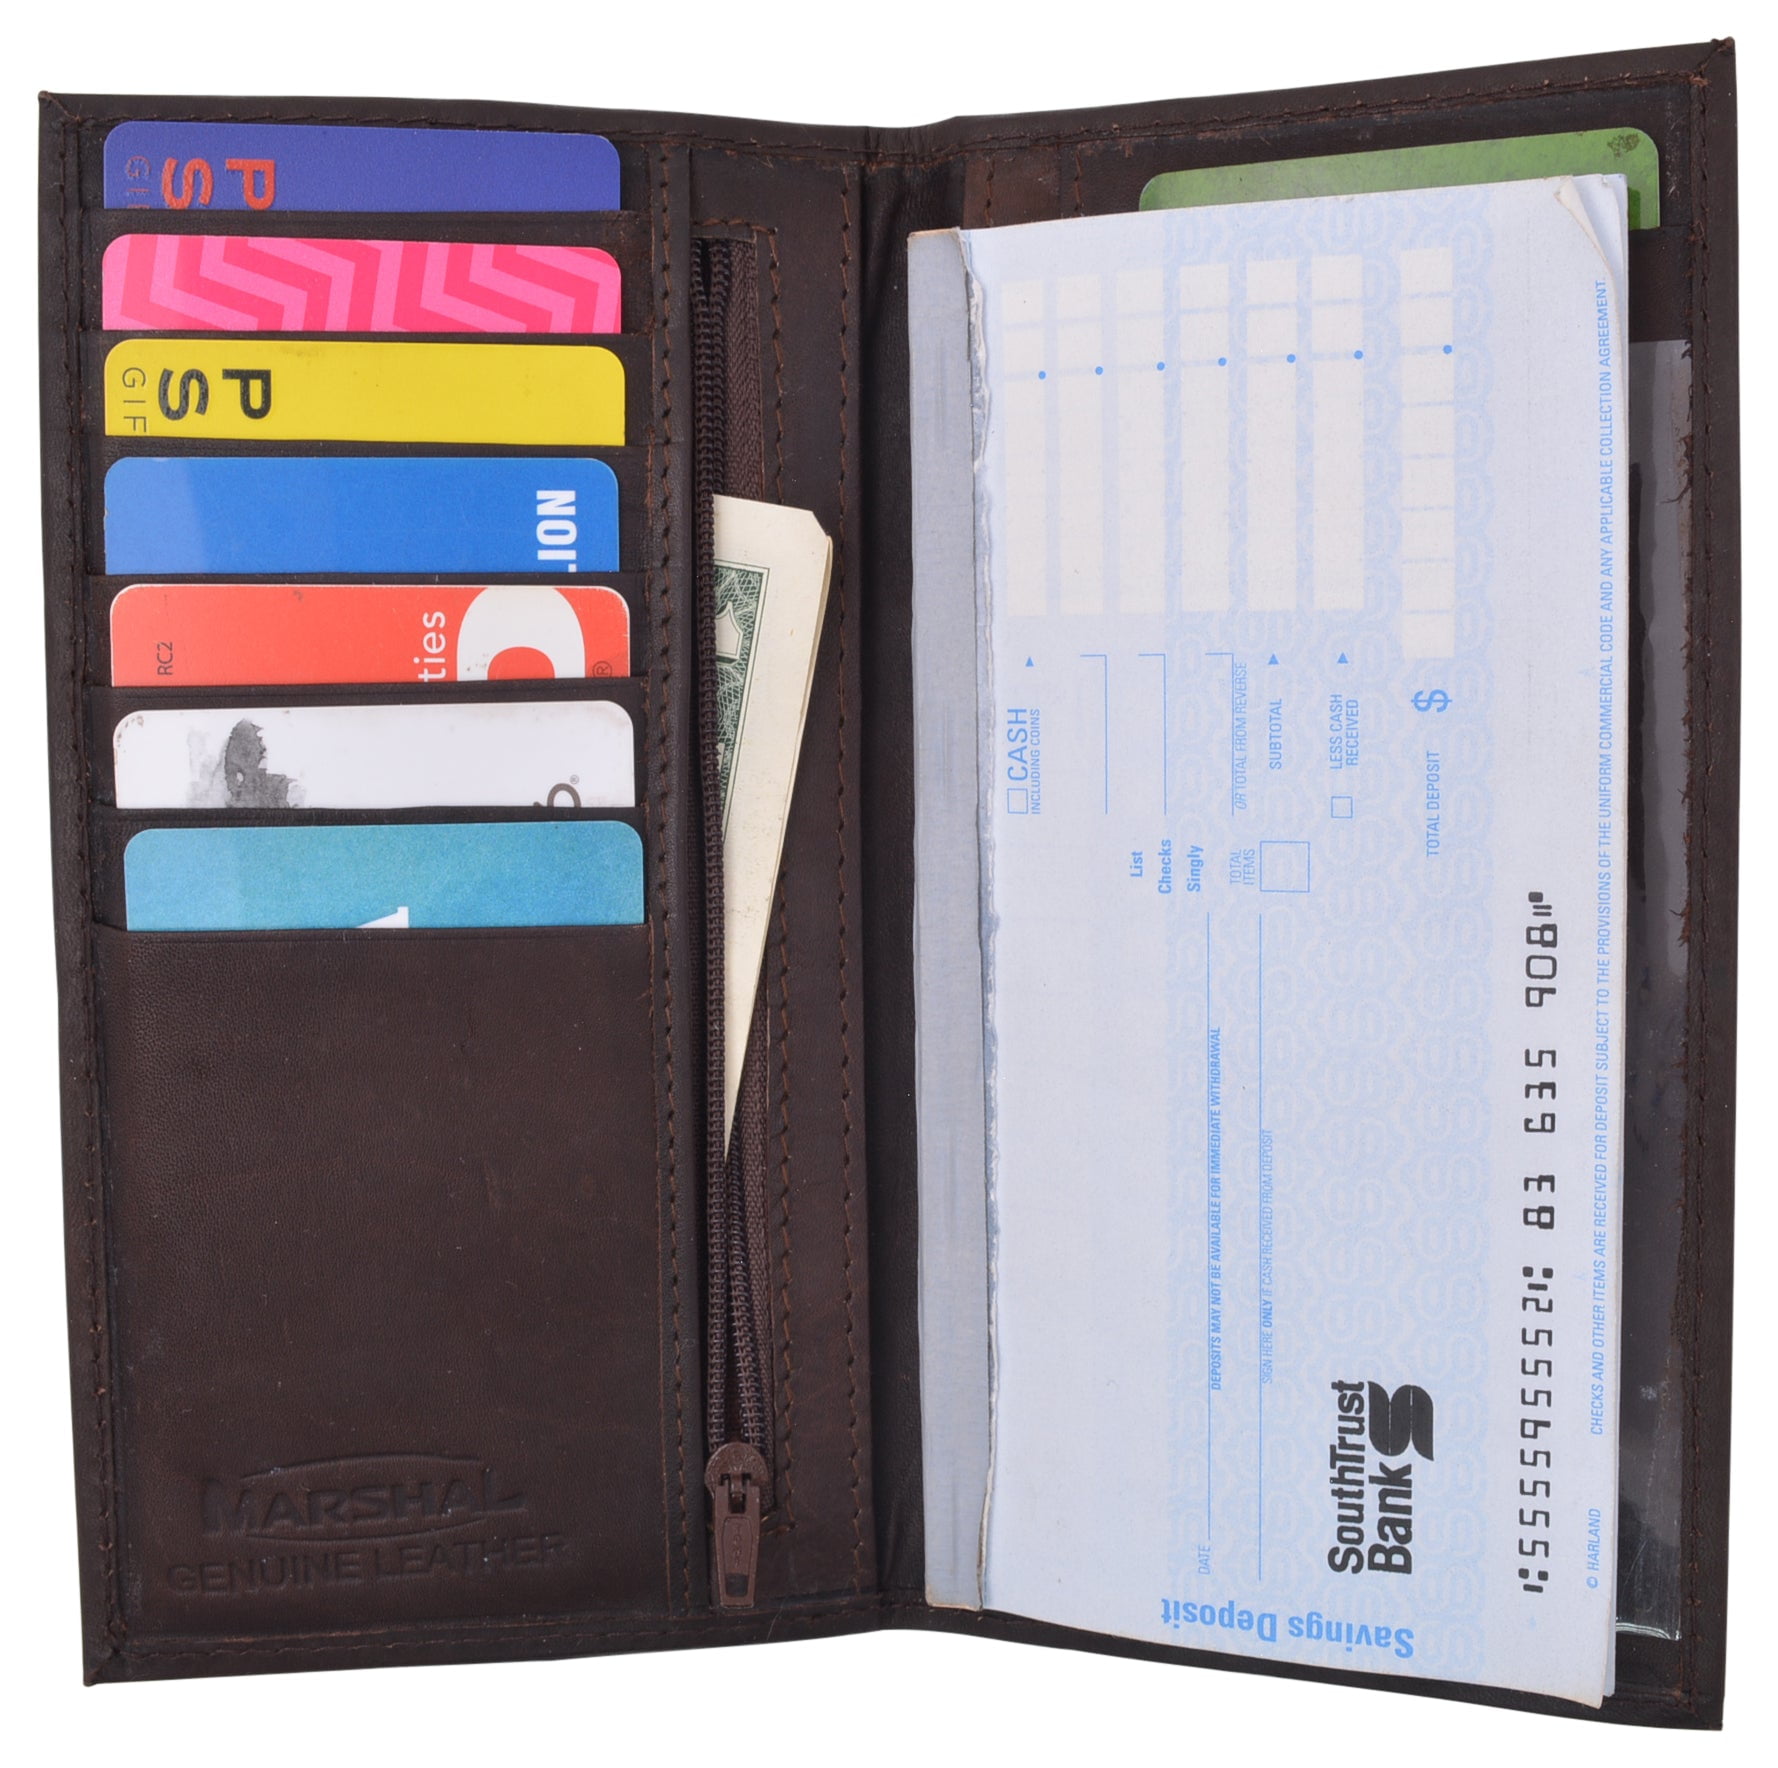 Genuine Leather Checkbook Cover Register Holder Slim Wallet for Men ...